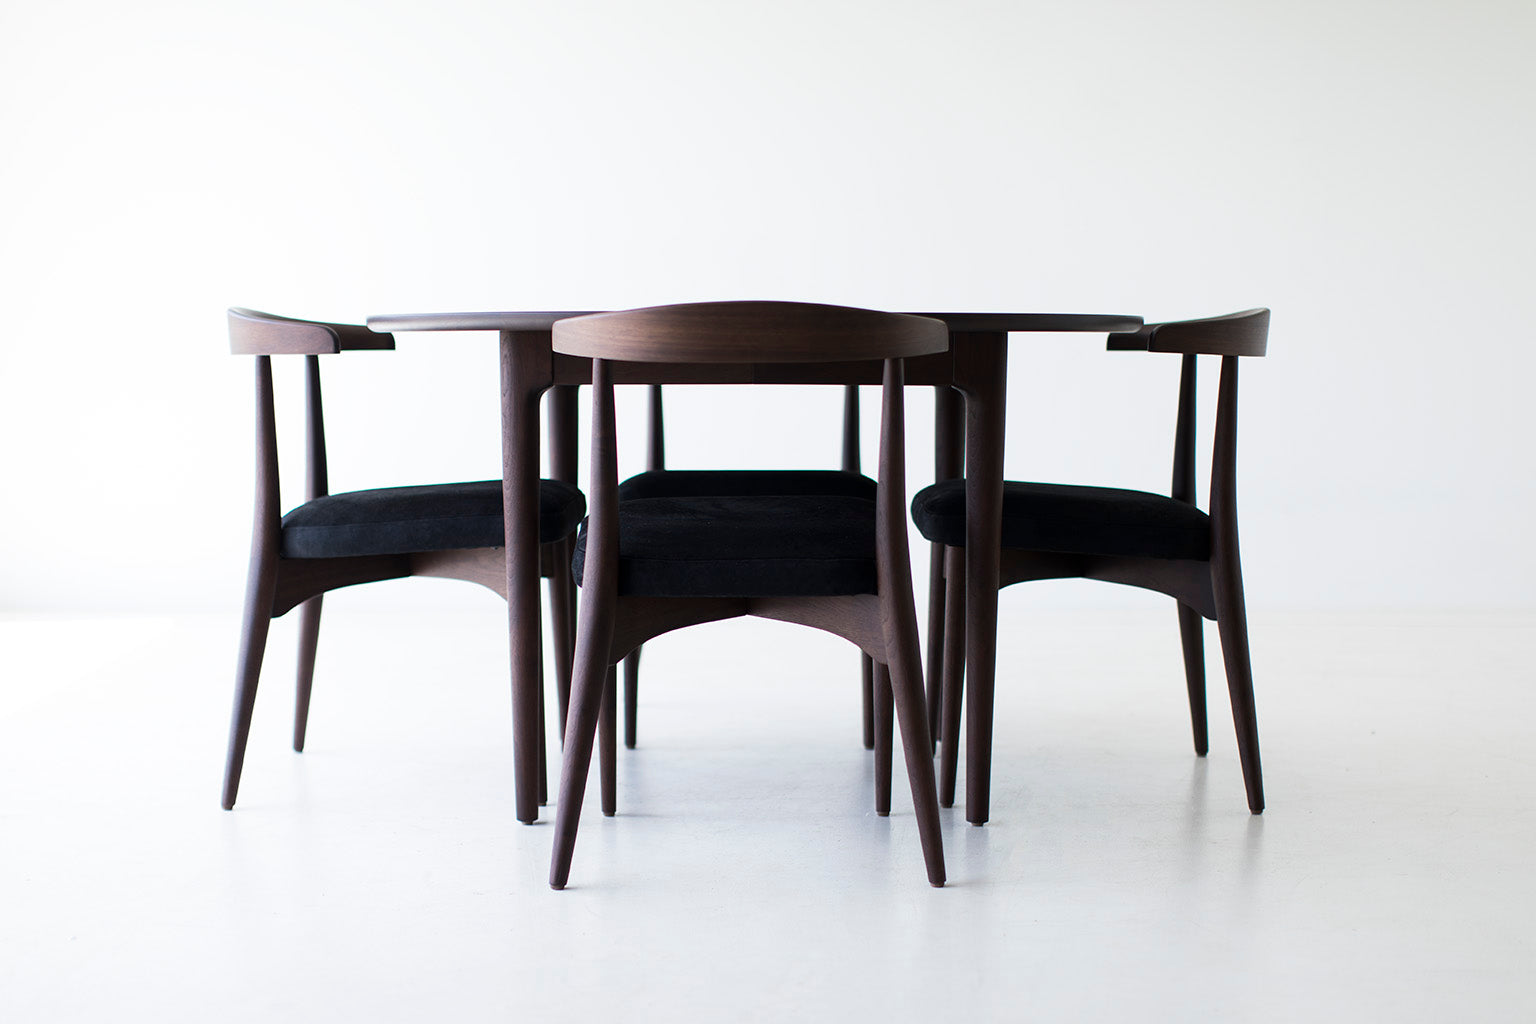 Peabody Modern Wood Dining Chair - 1707